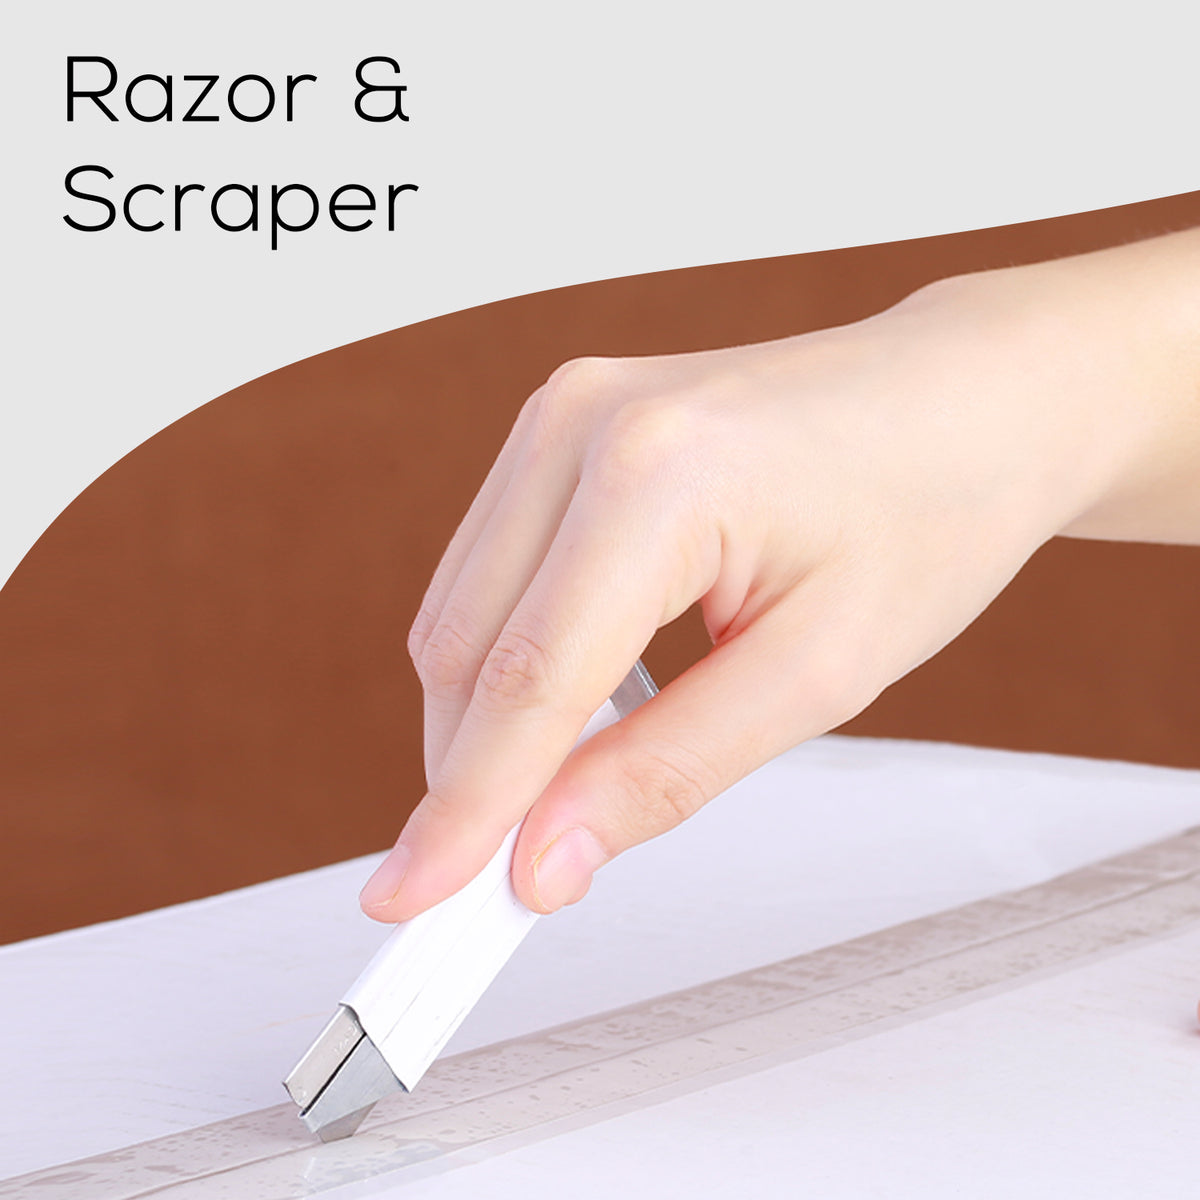 Plastic Razor Blade Scraper, 2 Pack Razor Scraper with 120 Pcs Razor Blades for Removing Glue, Sticker, Decals, Tint from Car Window and Glass